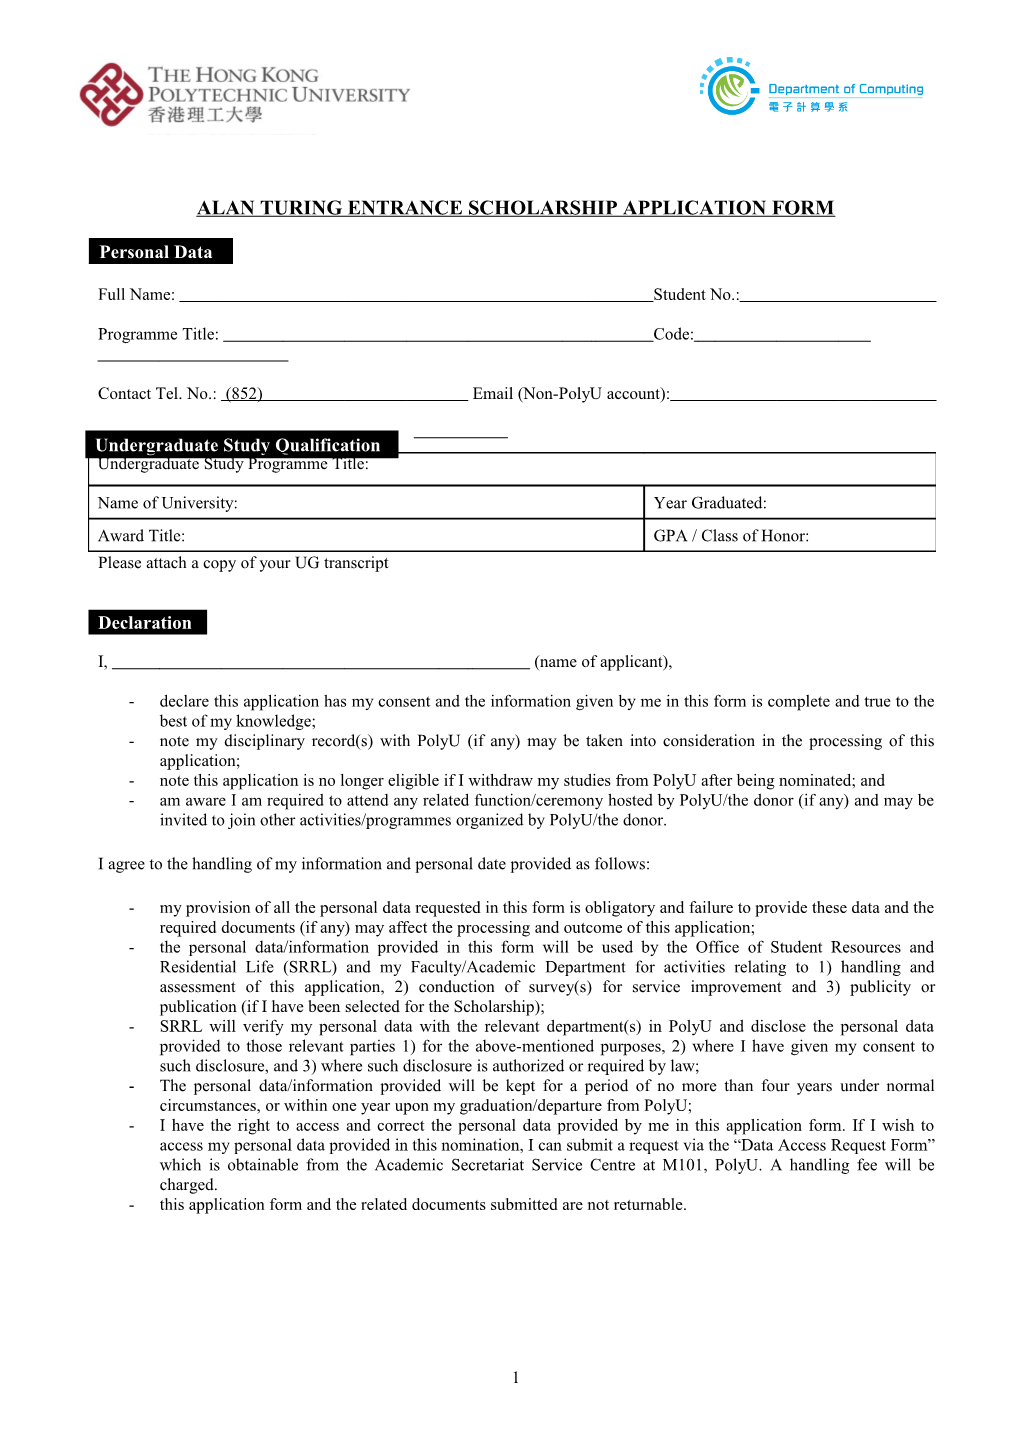 Alan Turing Entrance Scholarship Application Form